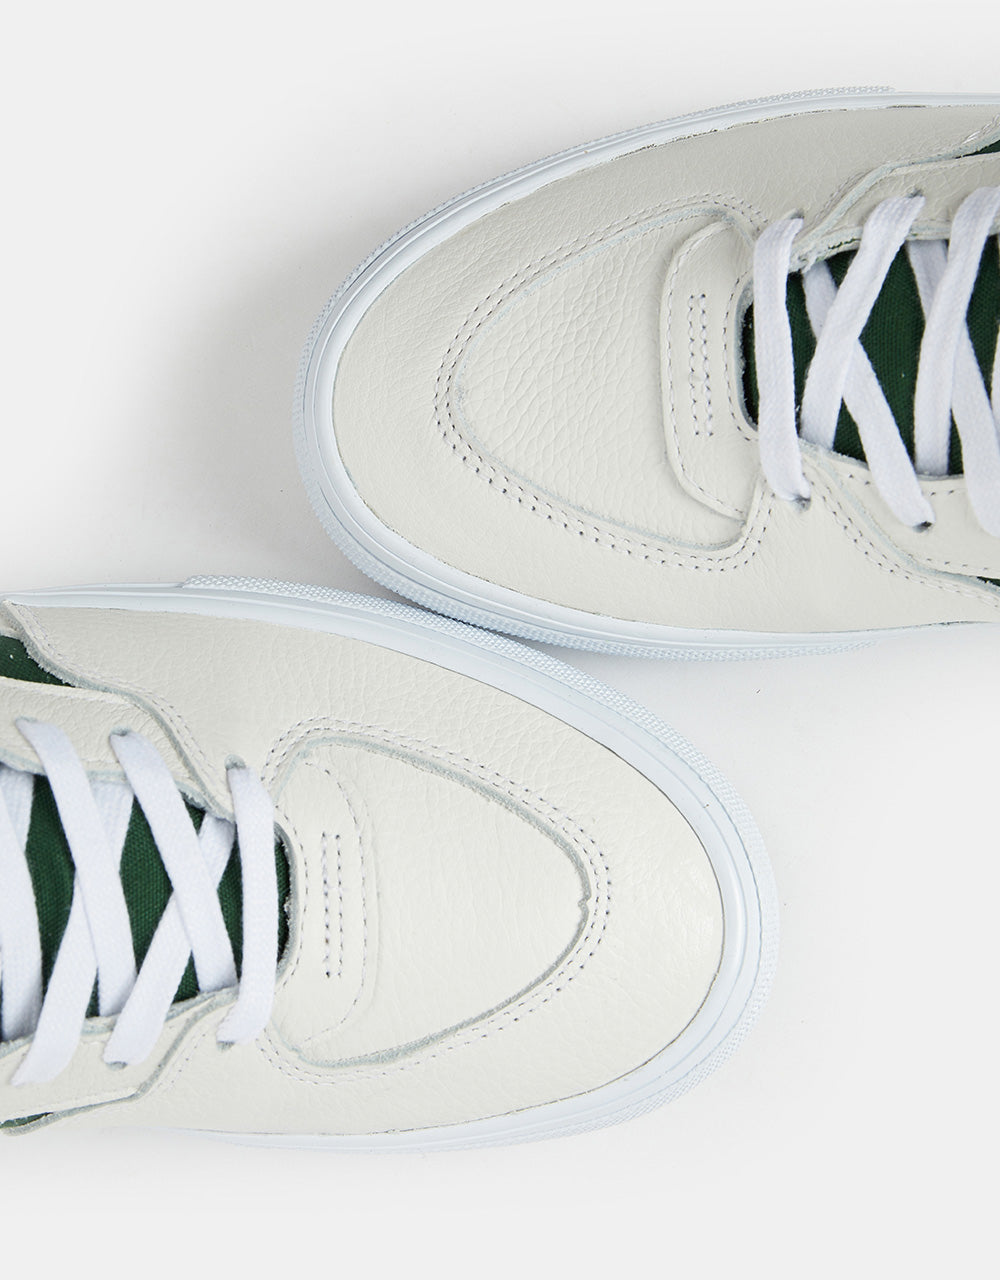 Vans Skate Half Cab Shoes - White/Green